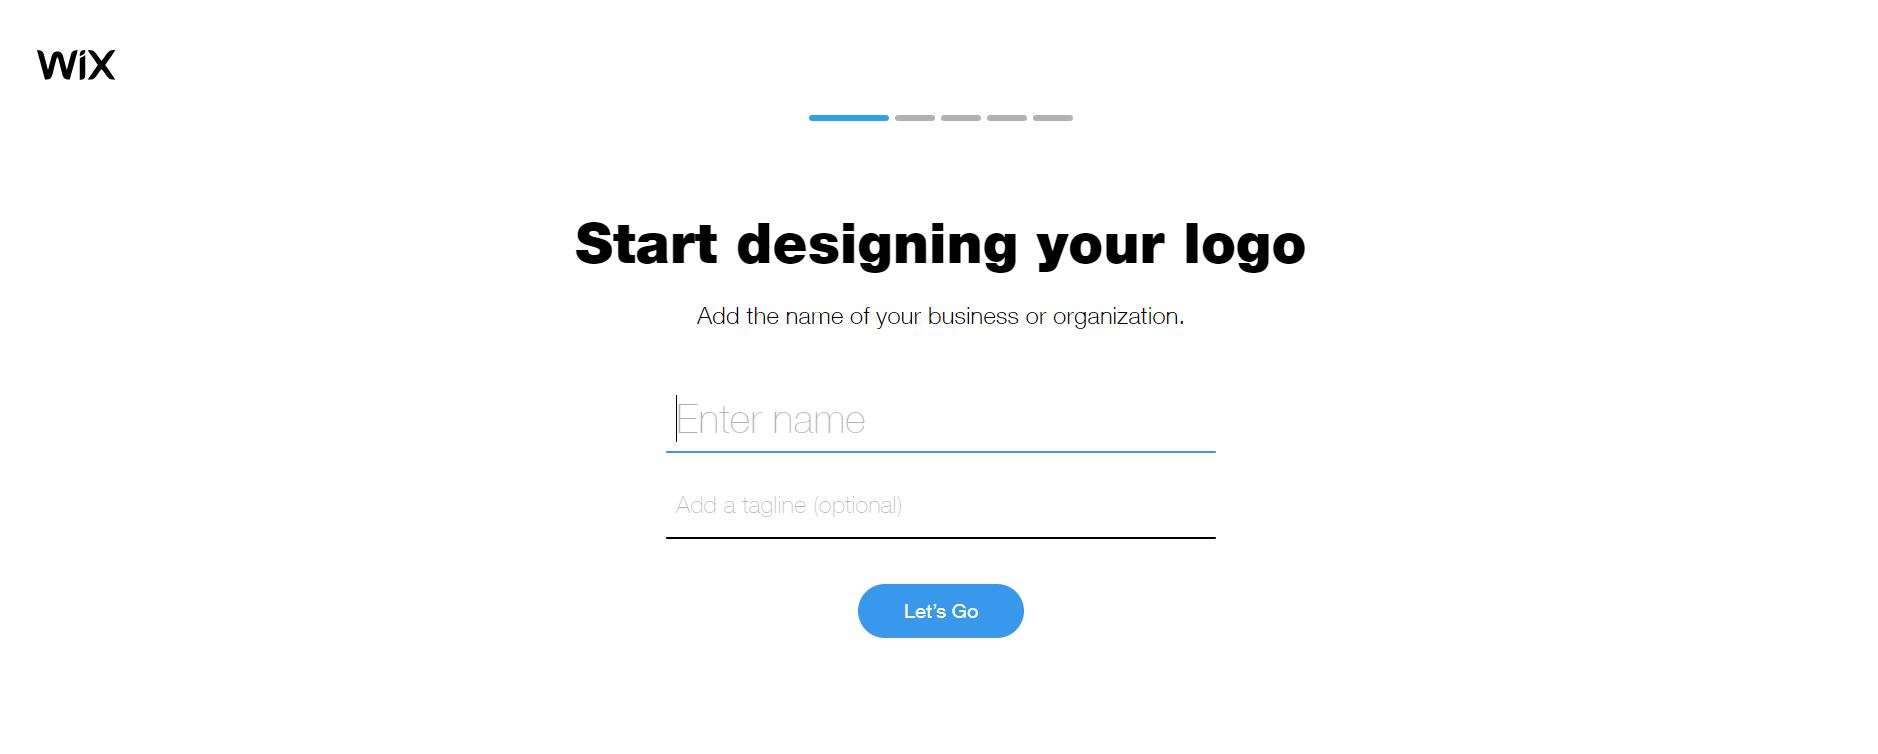 Wix Logo Maker screenshot - add business name